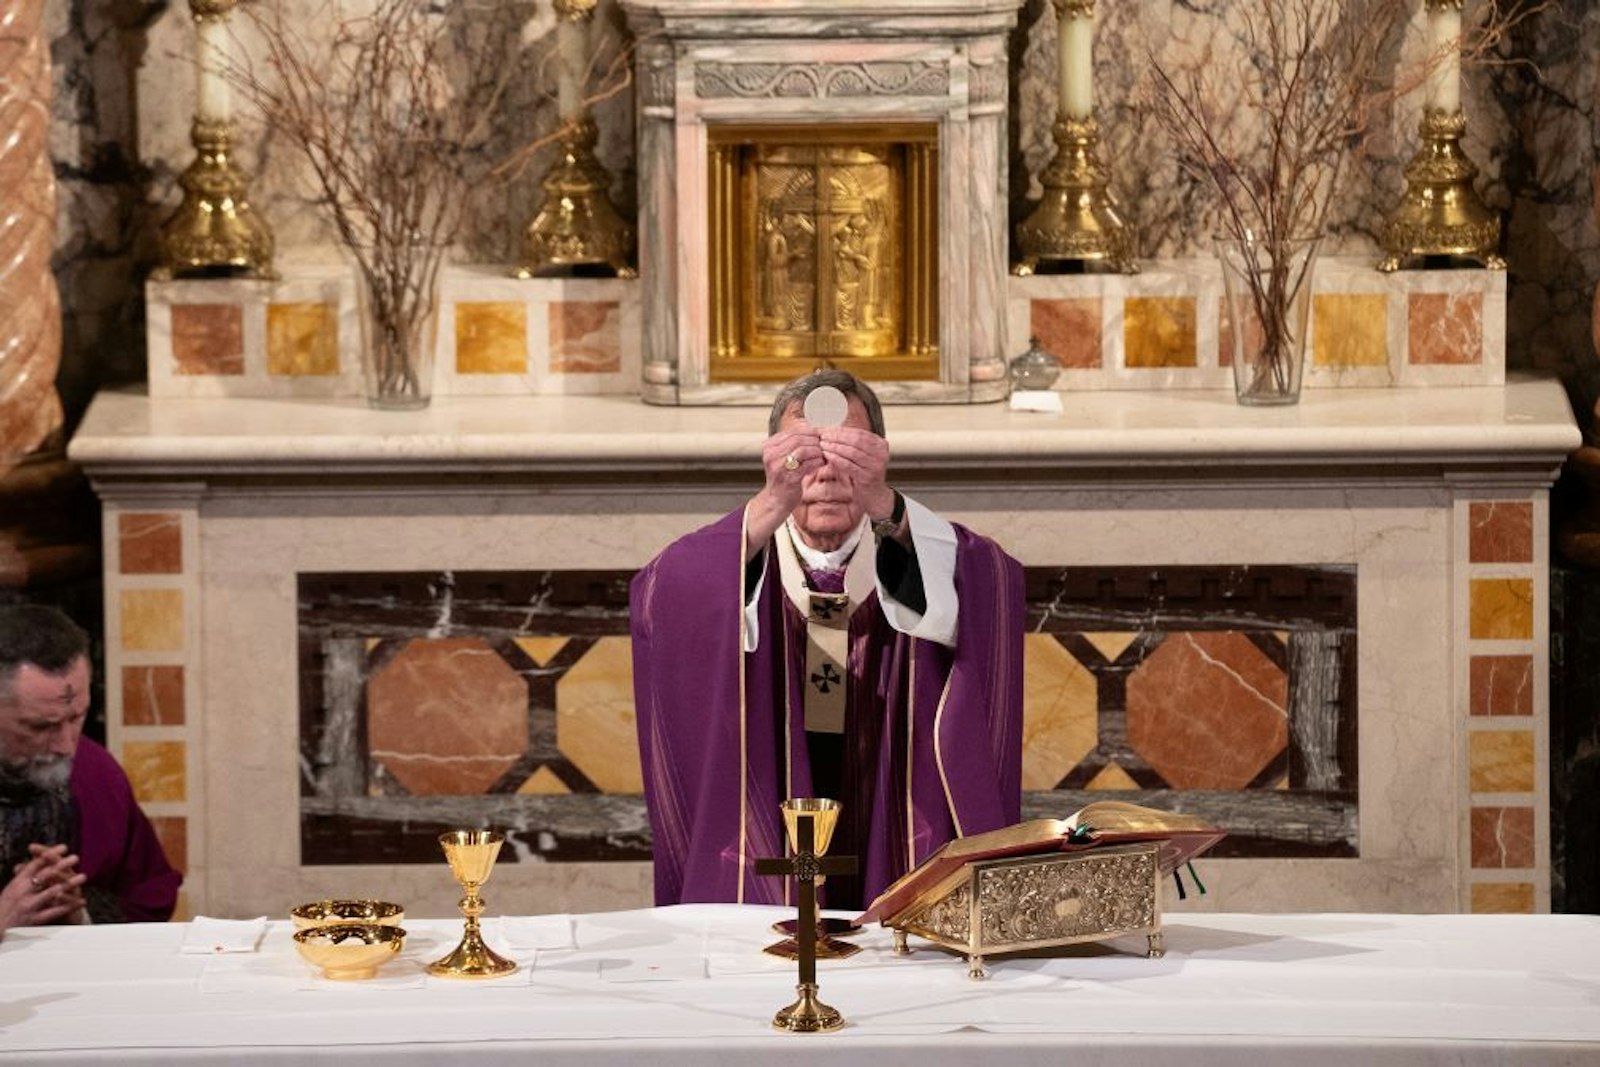 Archbishop Vigneron said the Eucharist serves as the faithful's "ration" during this Lenten campaign.